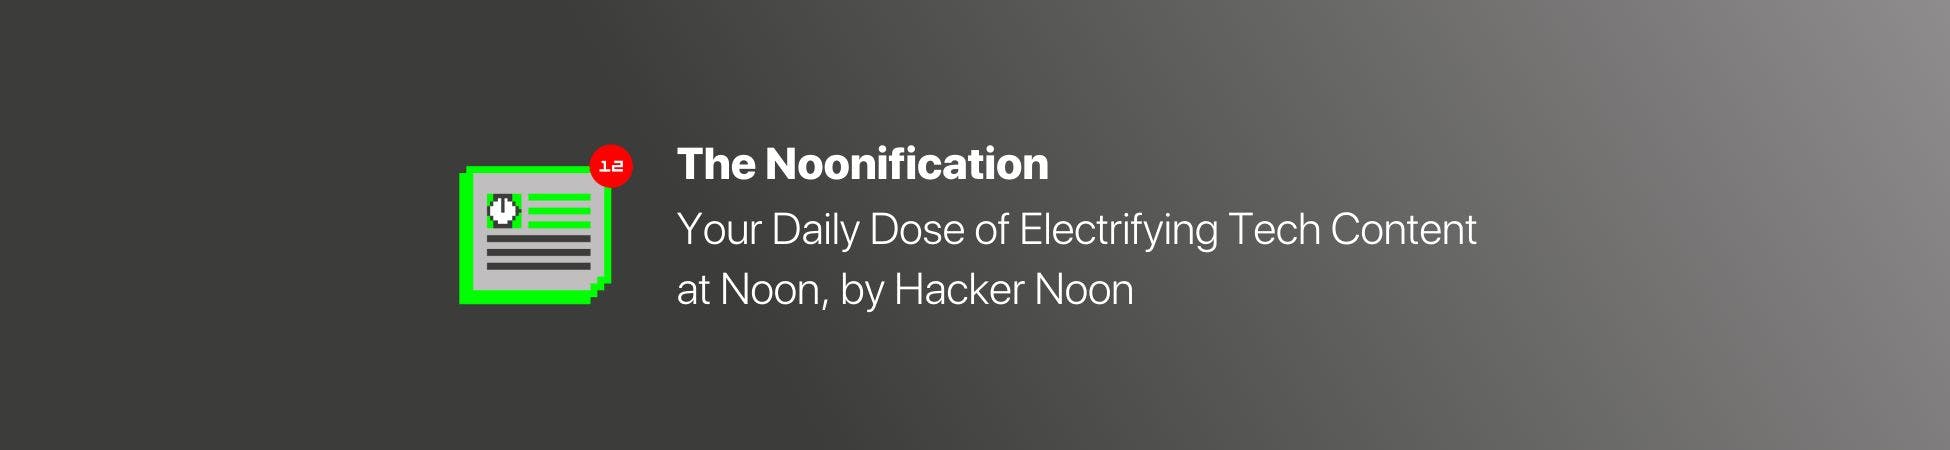 noonification-banner